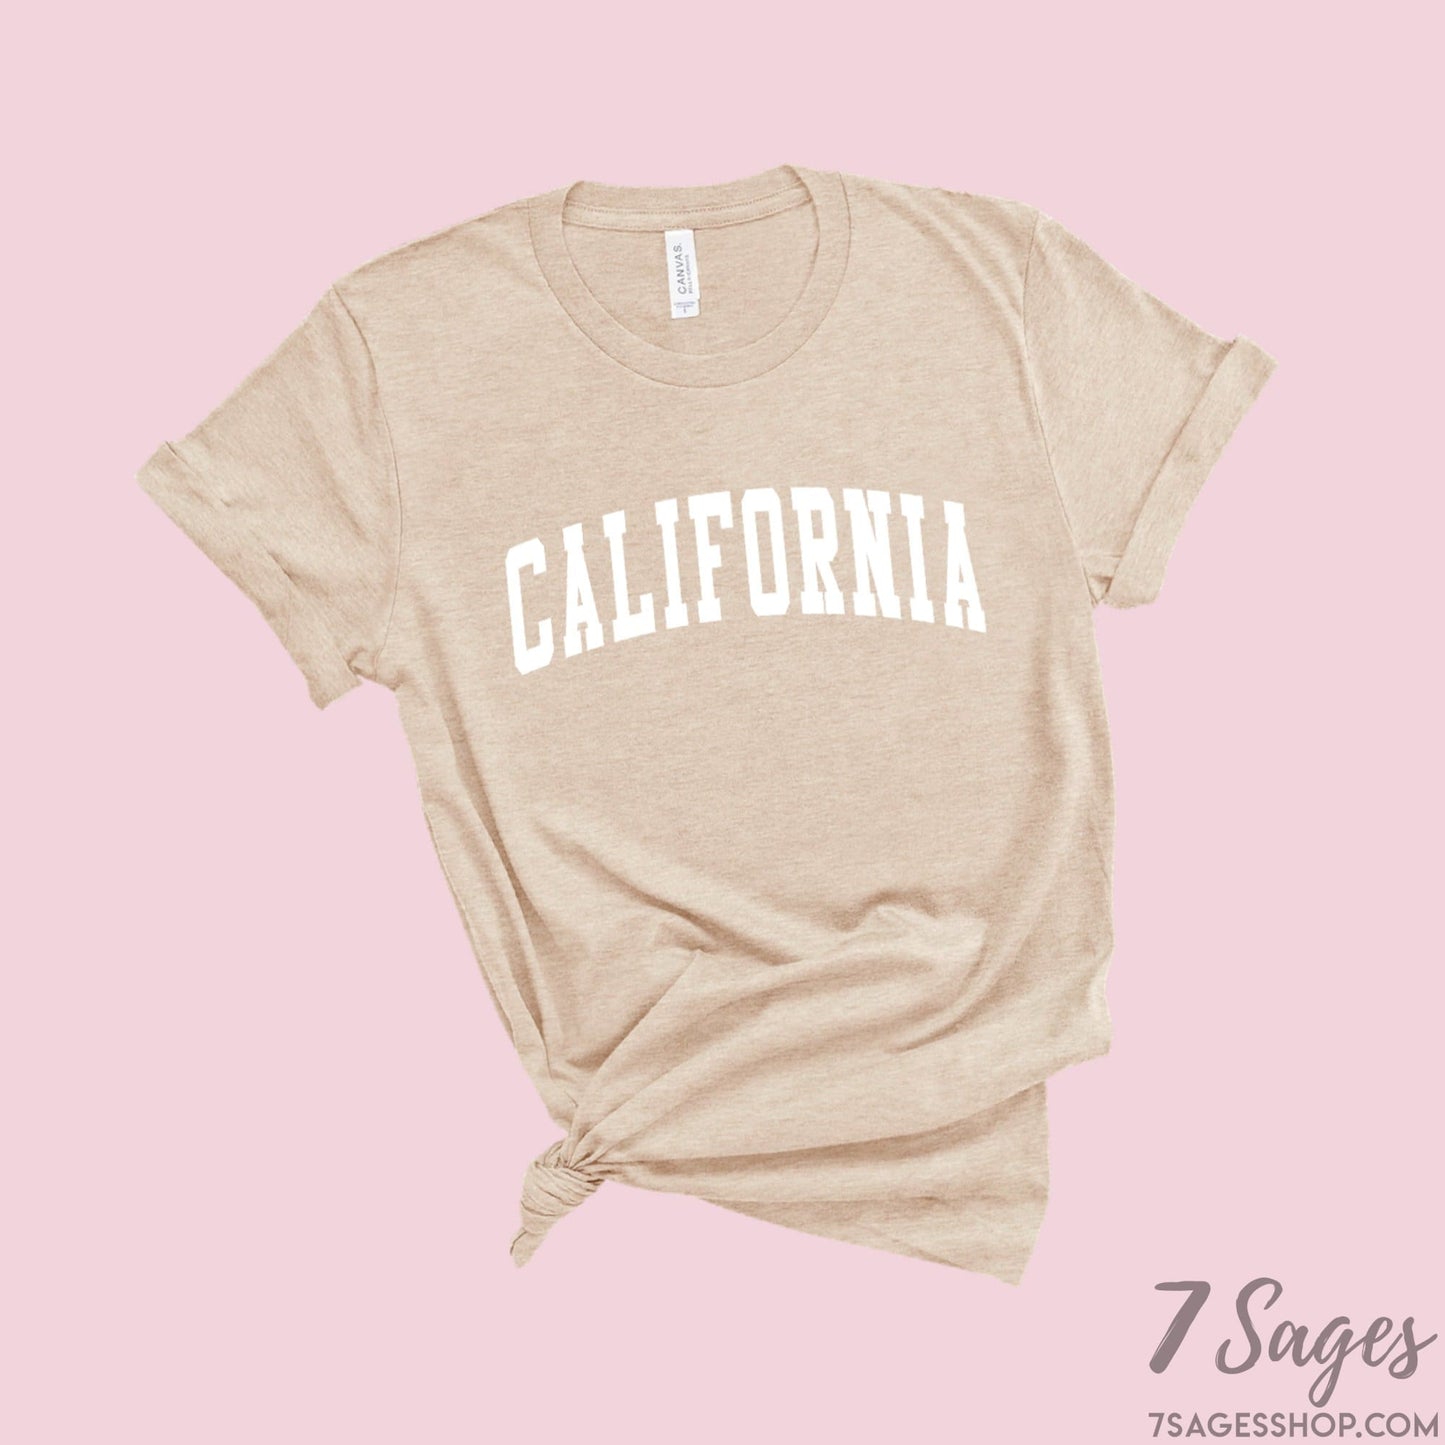 California Shirt University of California Shirt West Coast Shirt California University Shirt California State Shirt California Gift